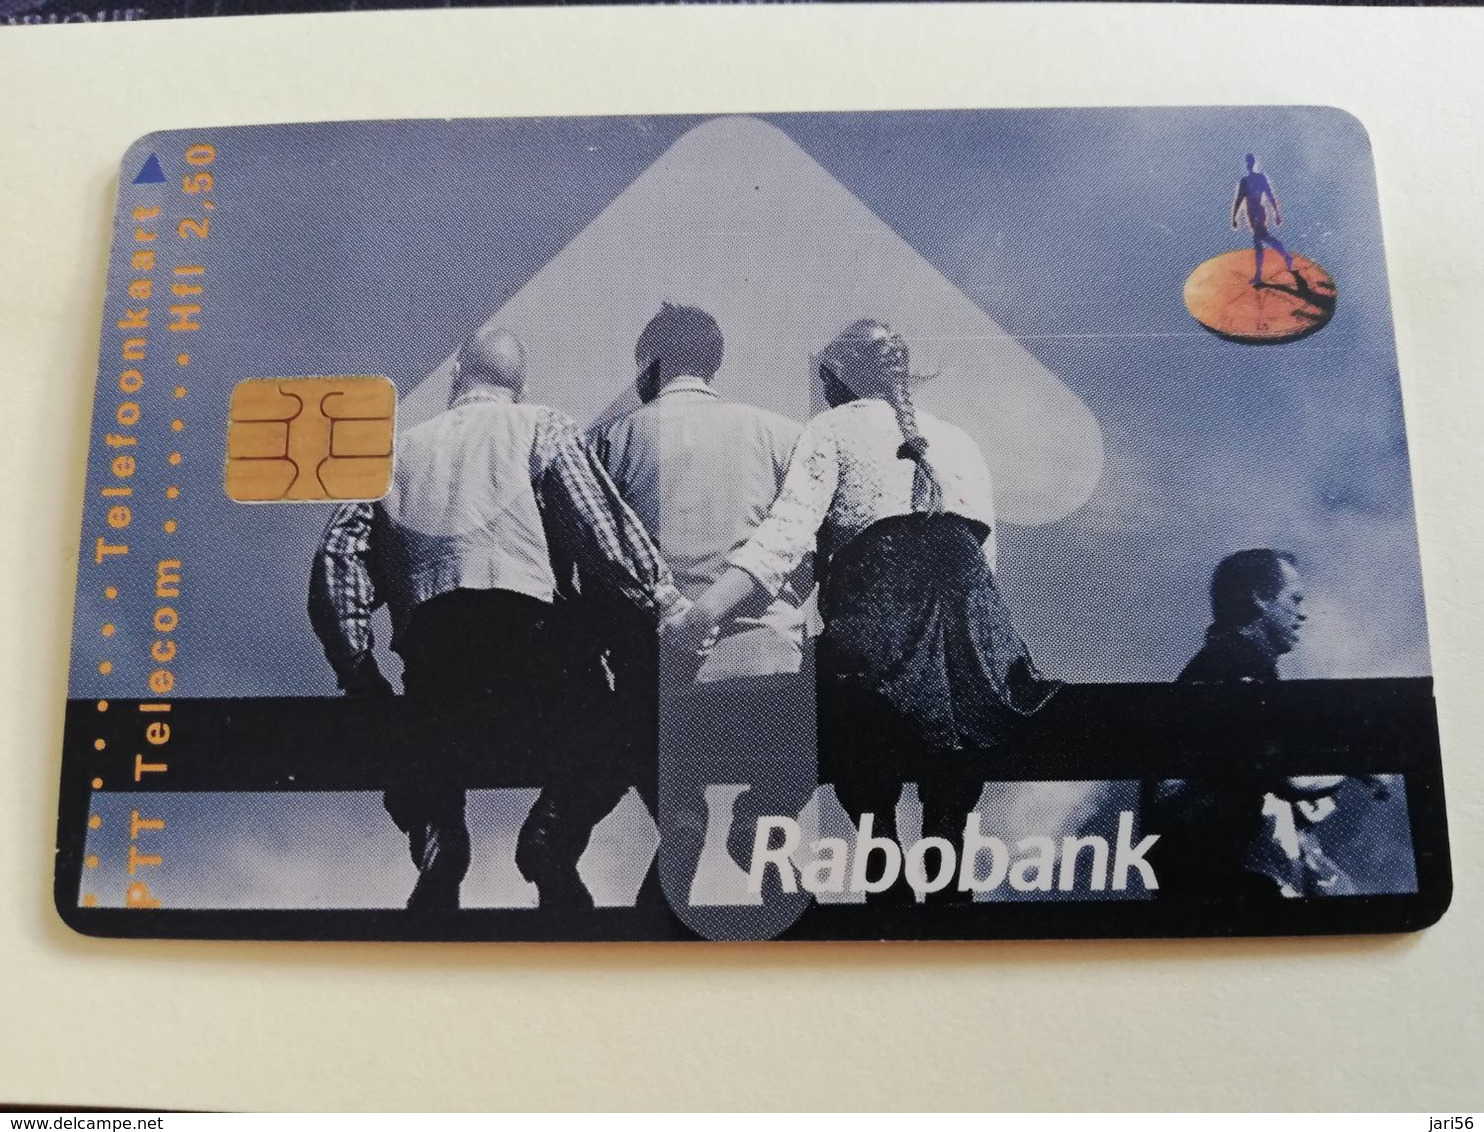 NETHERLANDS  ADVERTISING CHIPCARD HFL 2,50   CRD 378.01   RABOBANK  BANKJE            Fine Used   ** 3213** - Privat